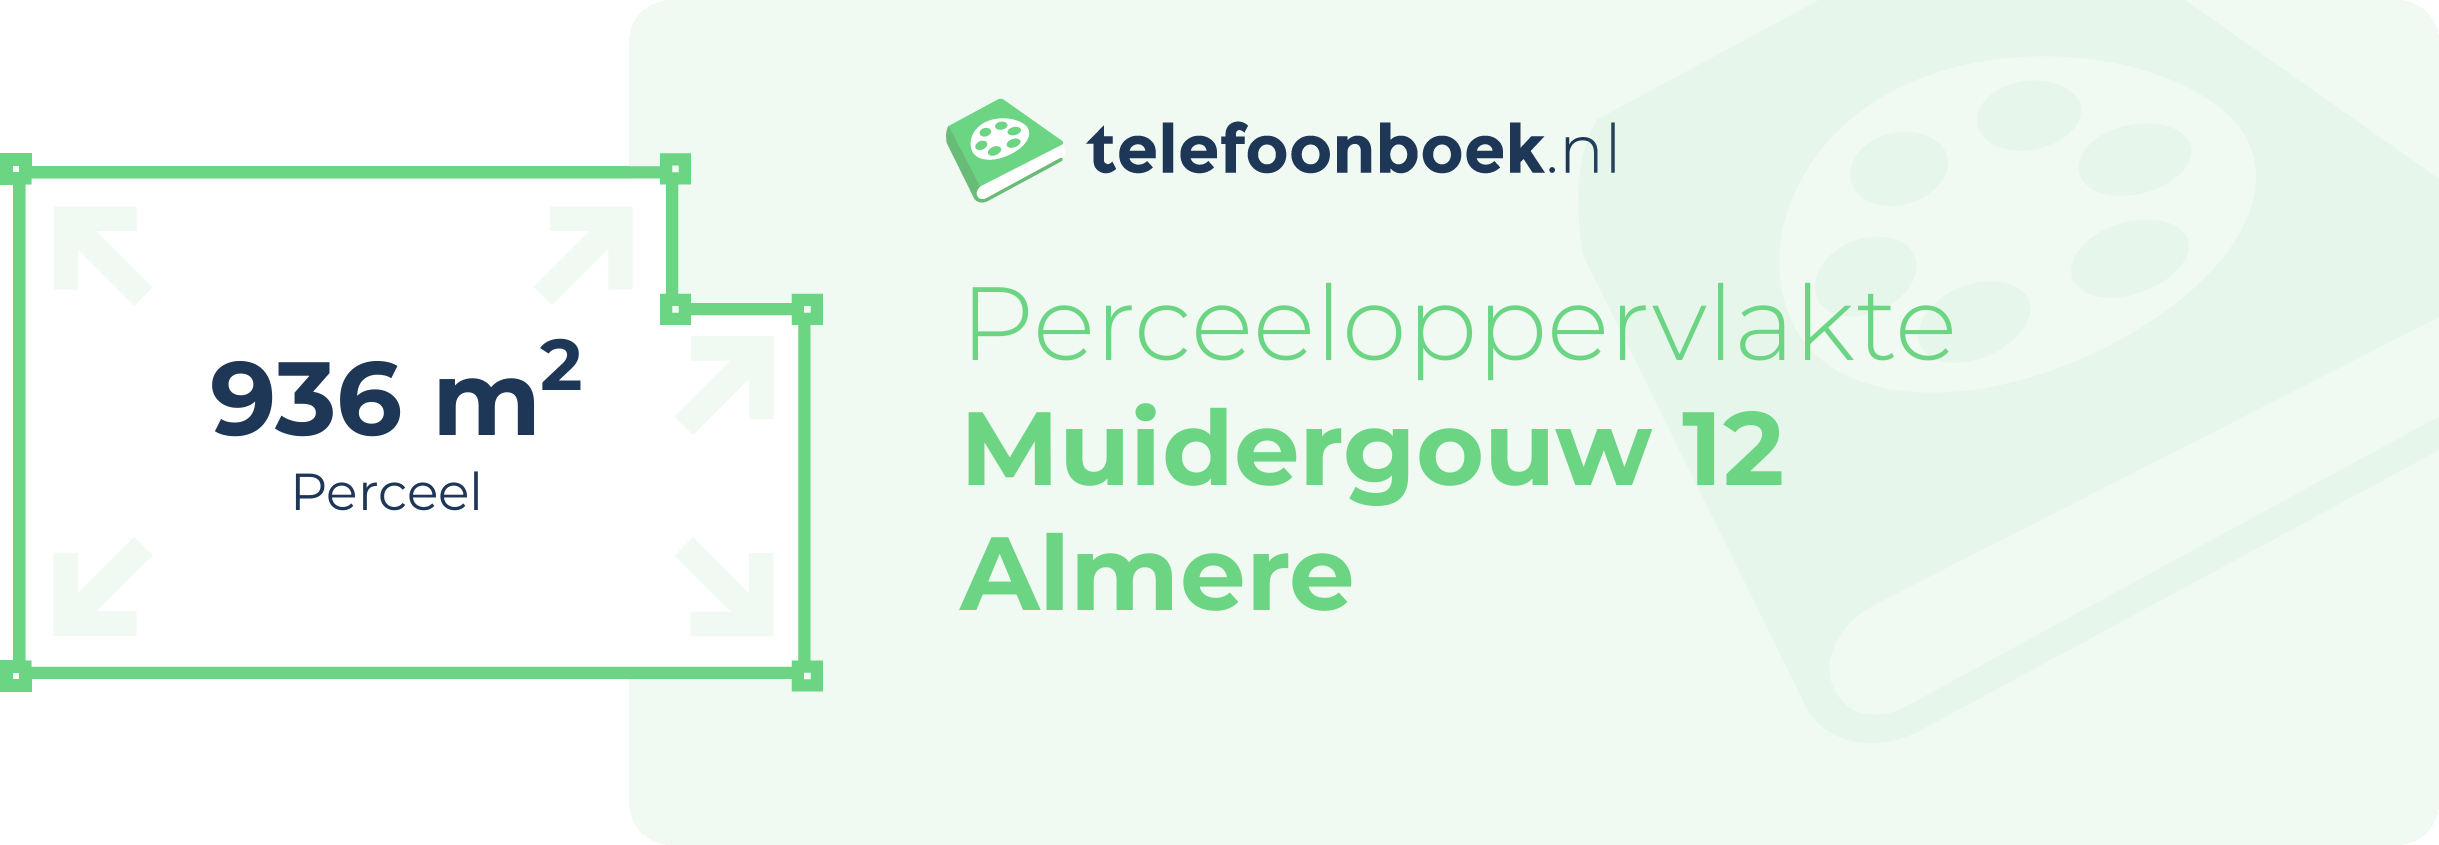 Perceeloppervlakte Muidergouw 12 Almere